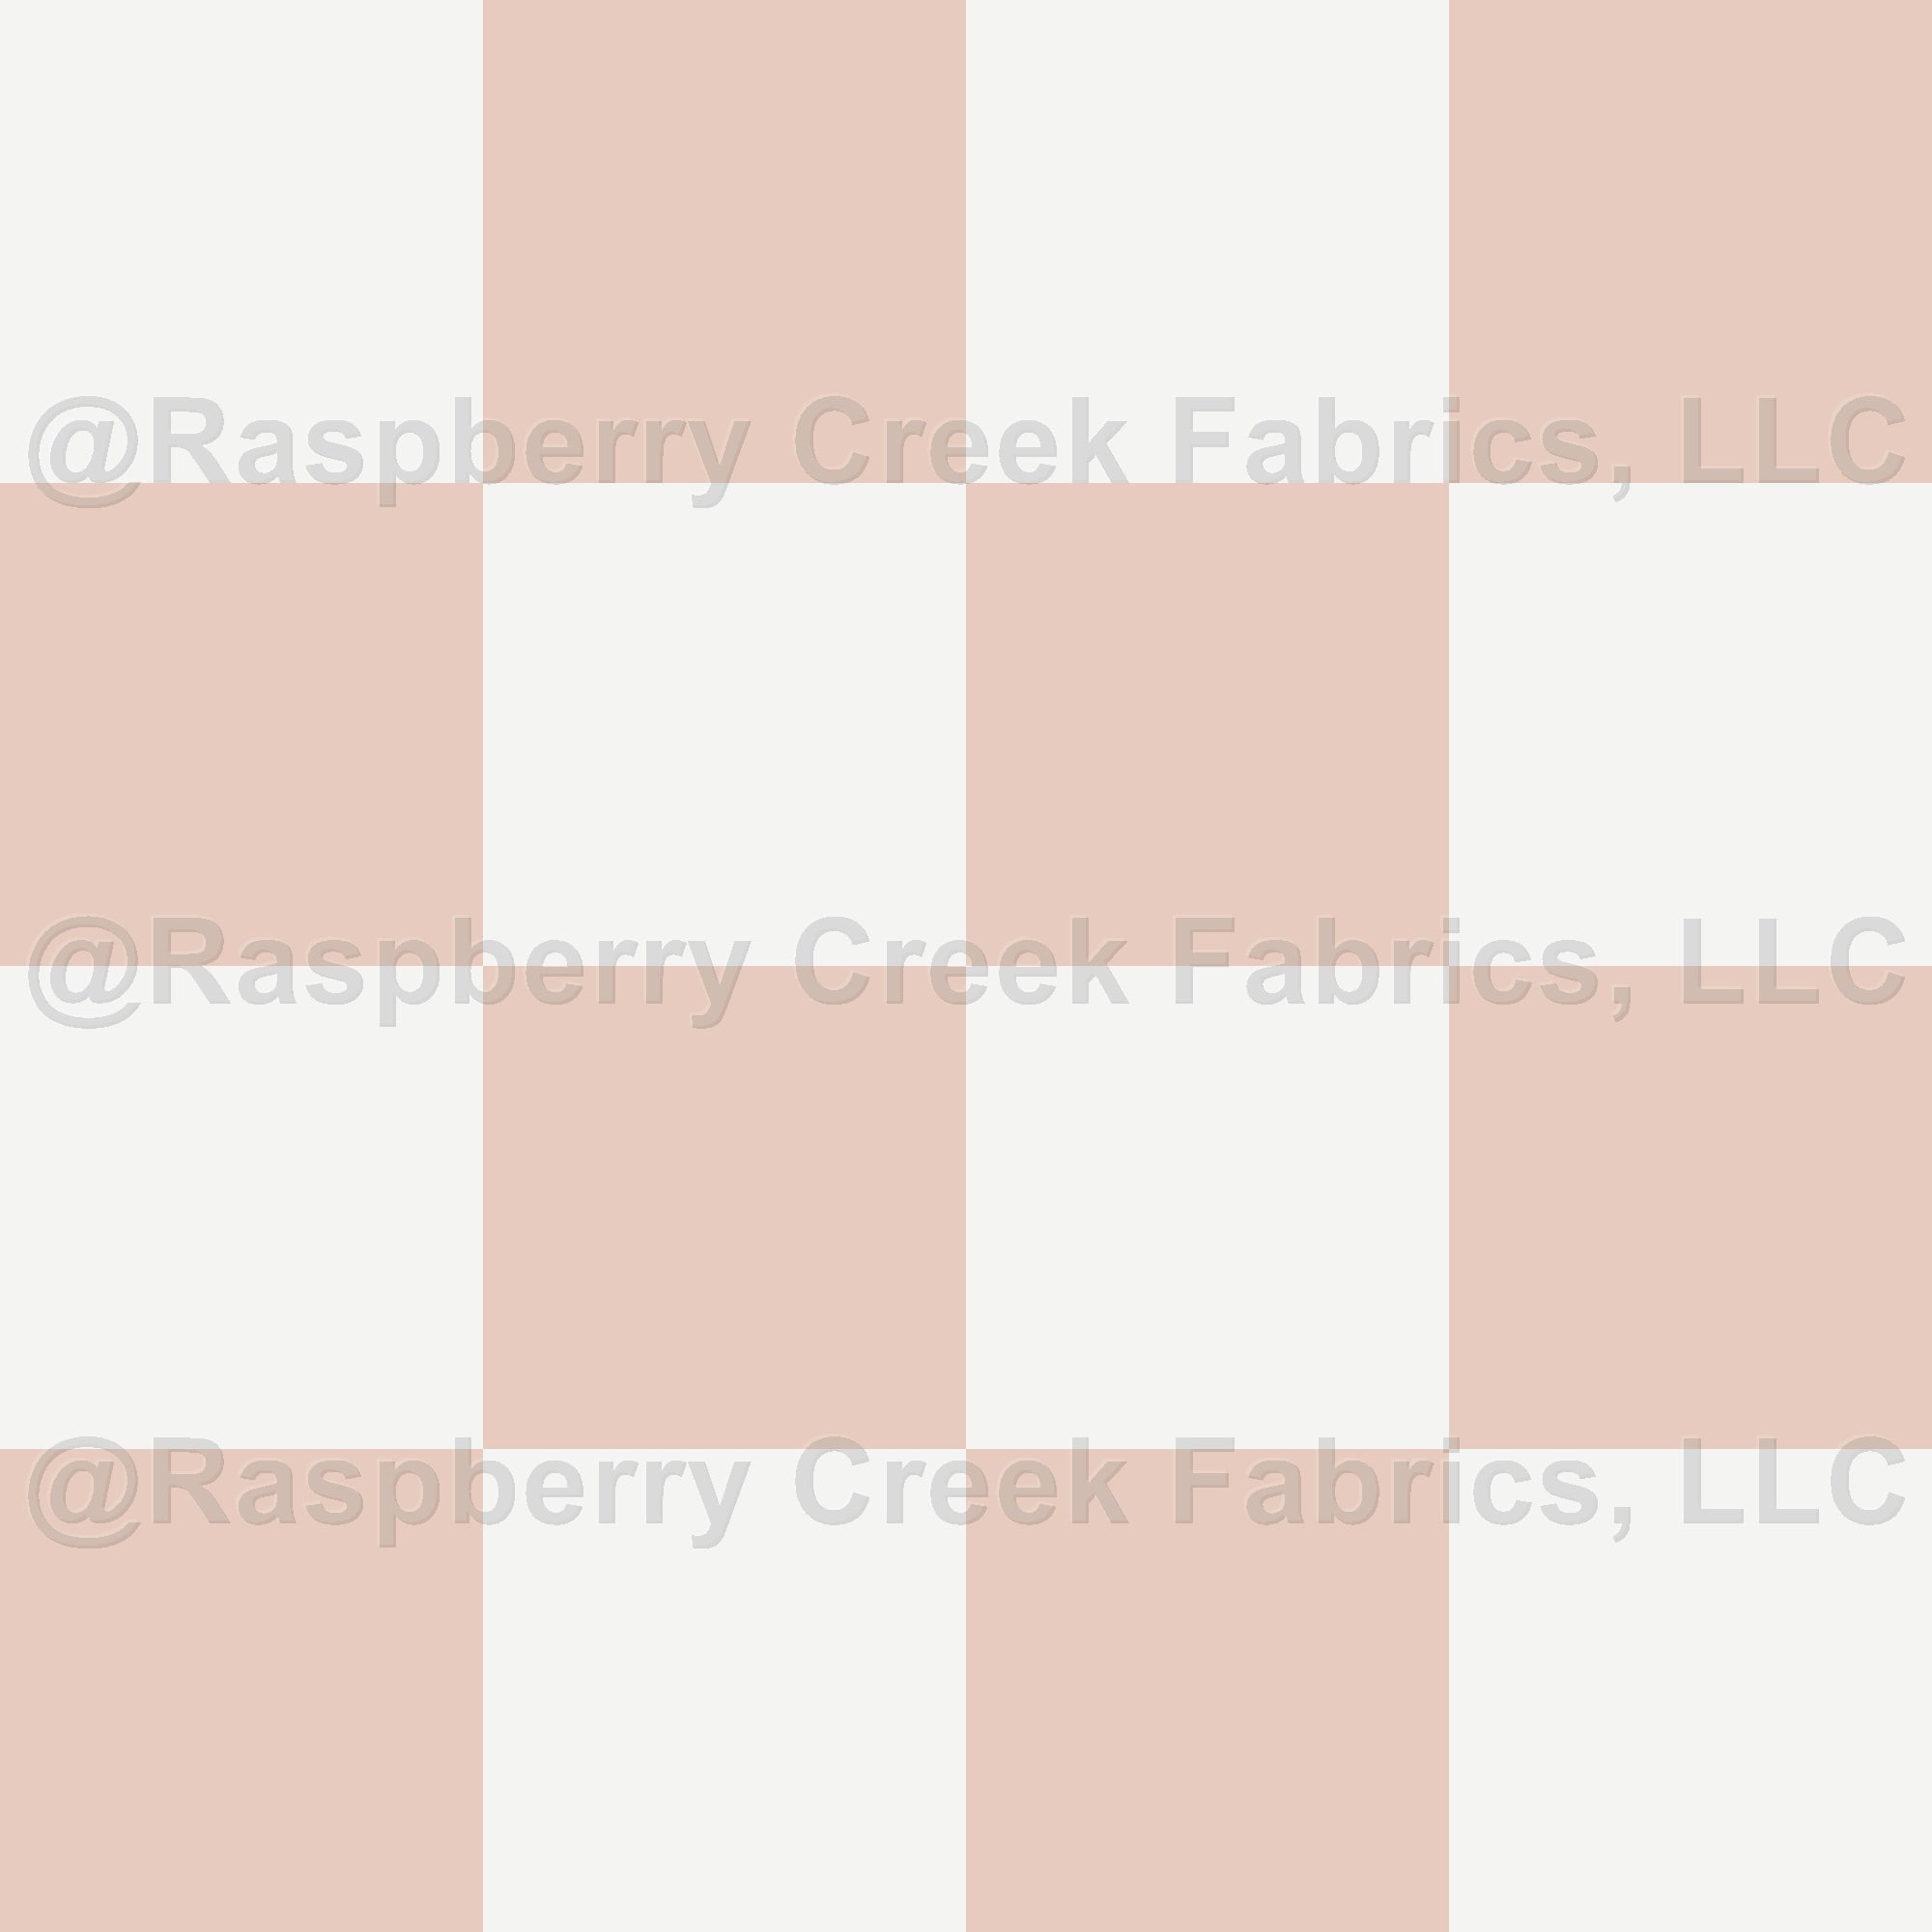 Pink Checkerboard Fabric, Raspberry Creek Fabrics, watermarked